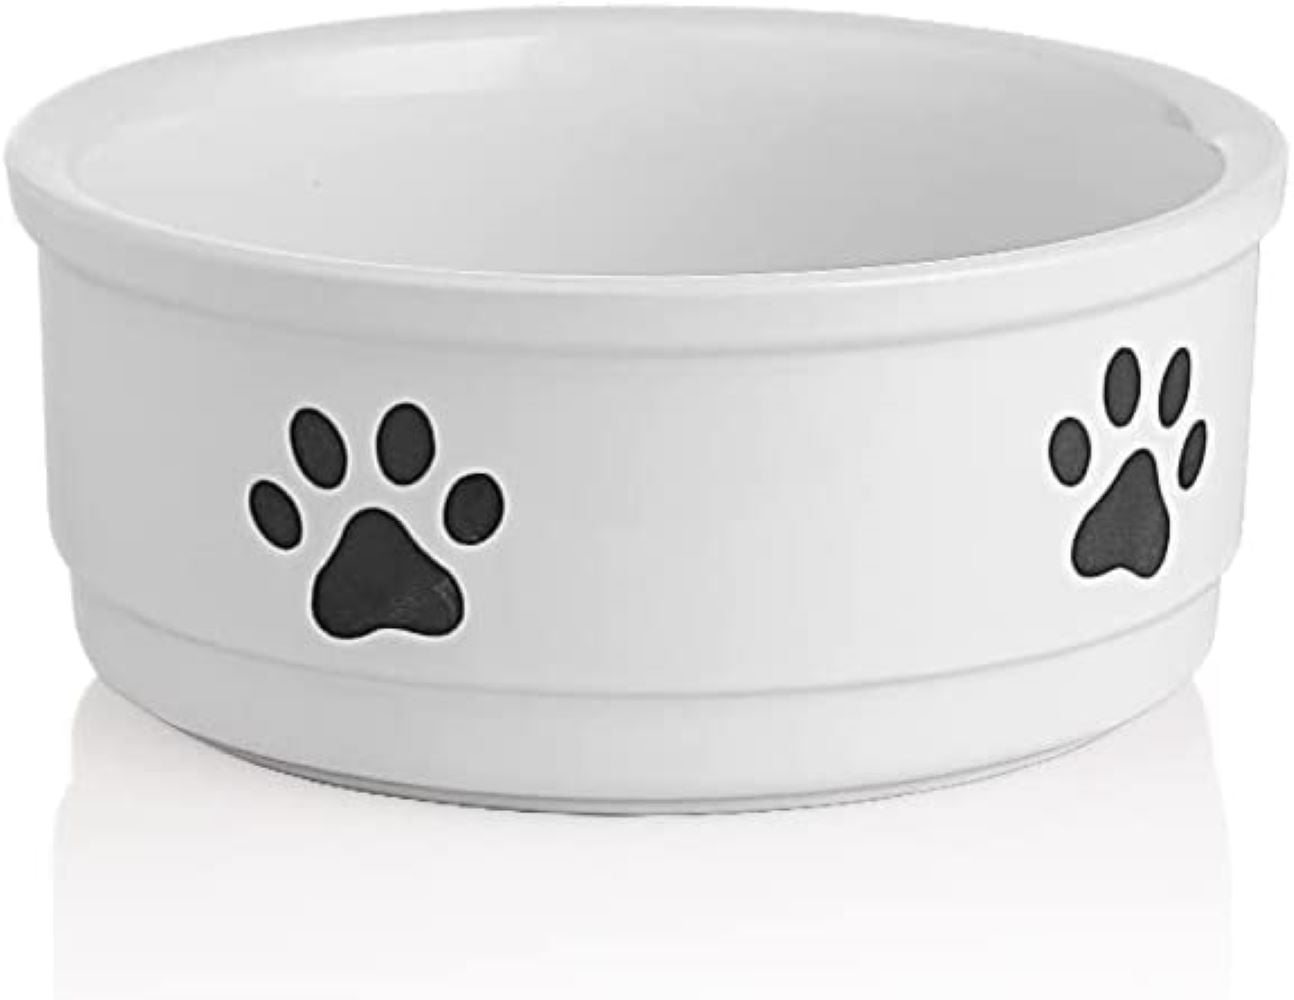 Ringware Dog Bowl Small